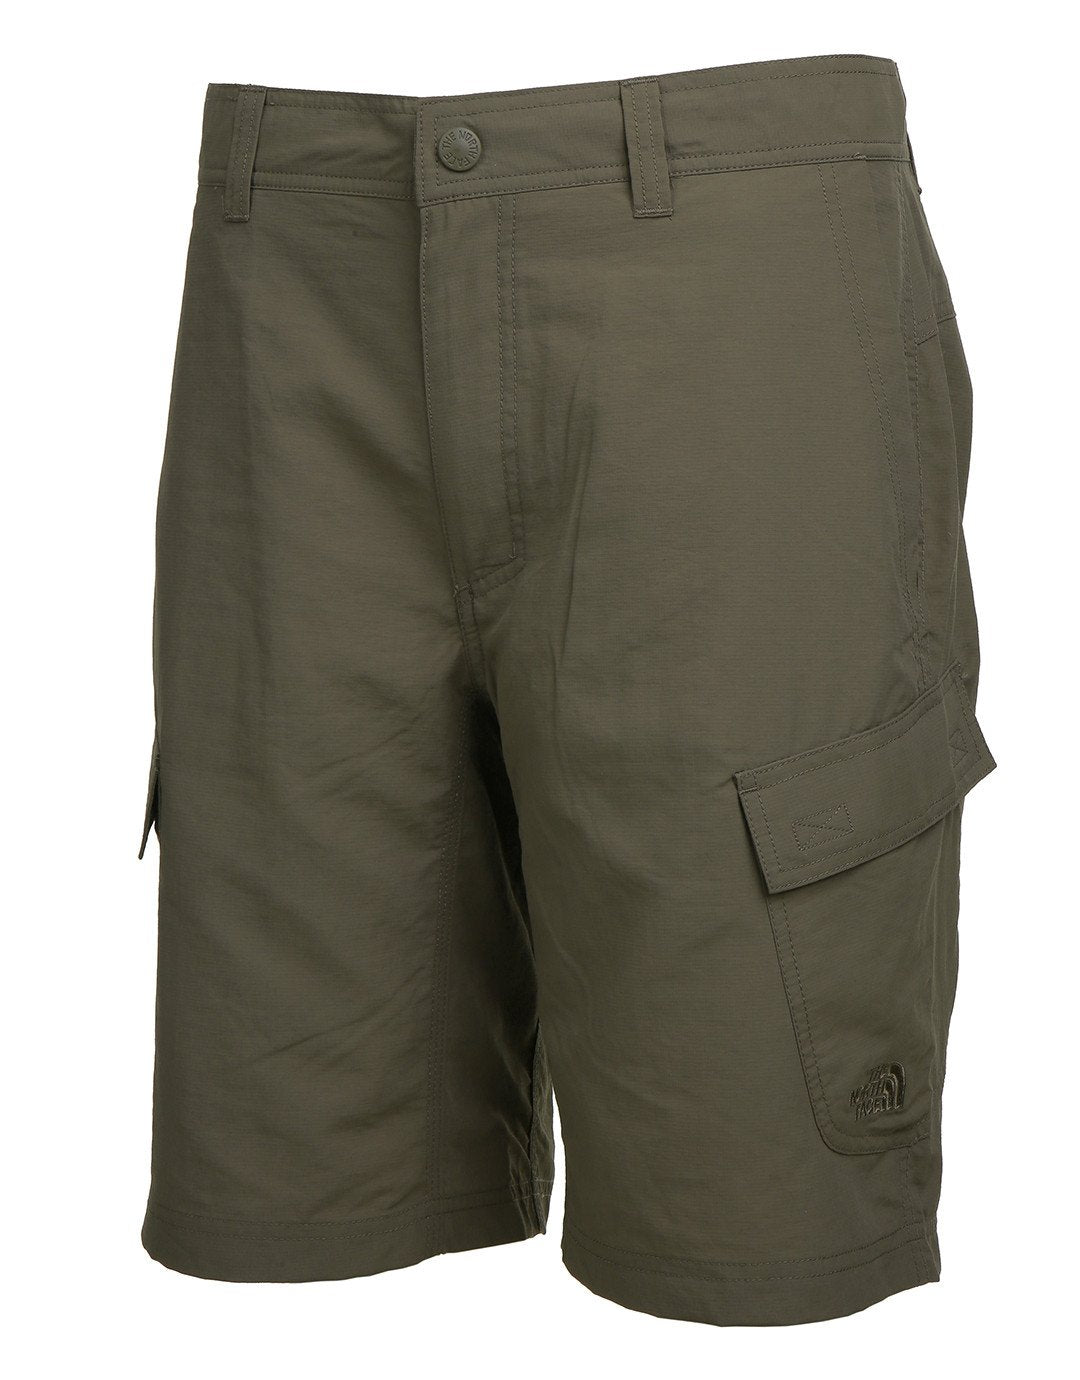 north face men's cargo shorts